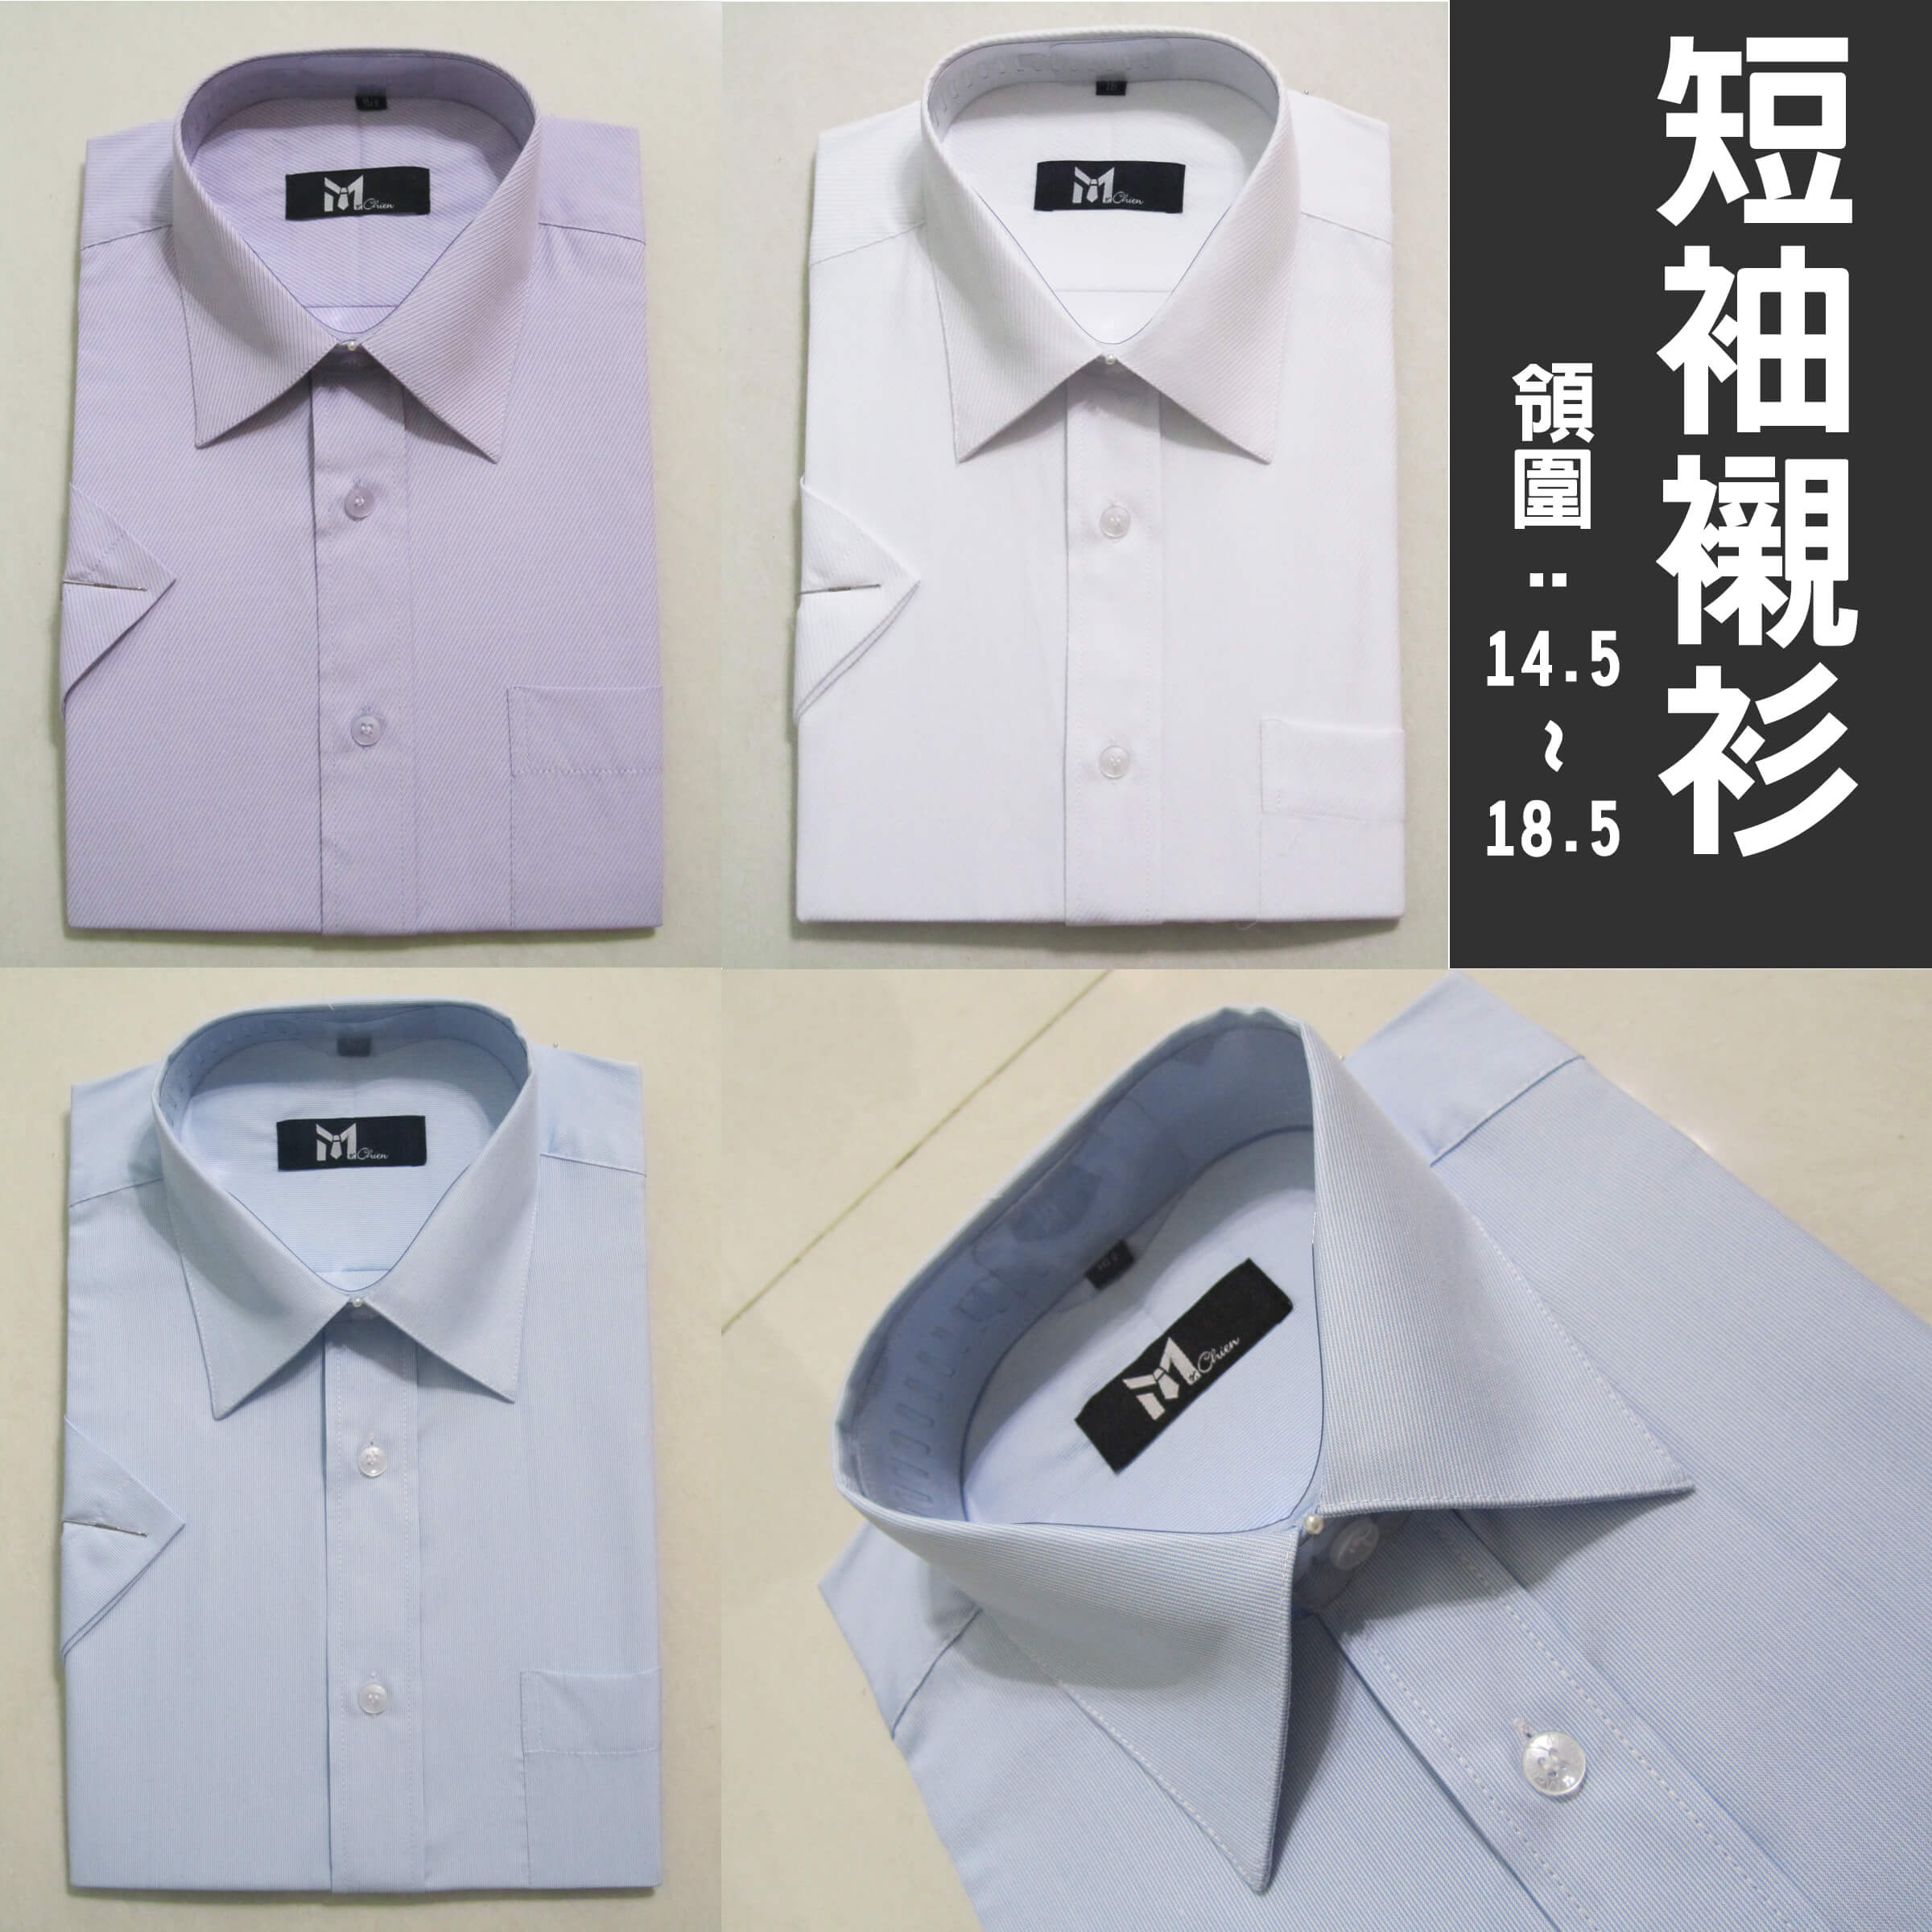 sun-e333短袖條紋襯衫、上班族襯衫、標準襯衫、商務襯衫、正式場合襯衫、柔棉舒適襯衫、不皺免燙襯衫、細條紋襯衫(333-2518-01)白色斜條紋襯衫(333-1394-23)紫色斜條紋襯衫(333-1335-09)藍色直條紋襯衫 領圍:14.5、15、15.5、16、16.5、17.5、18.5